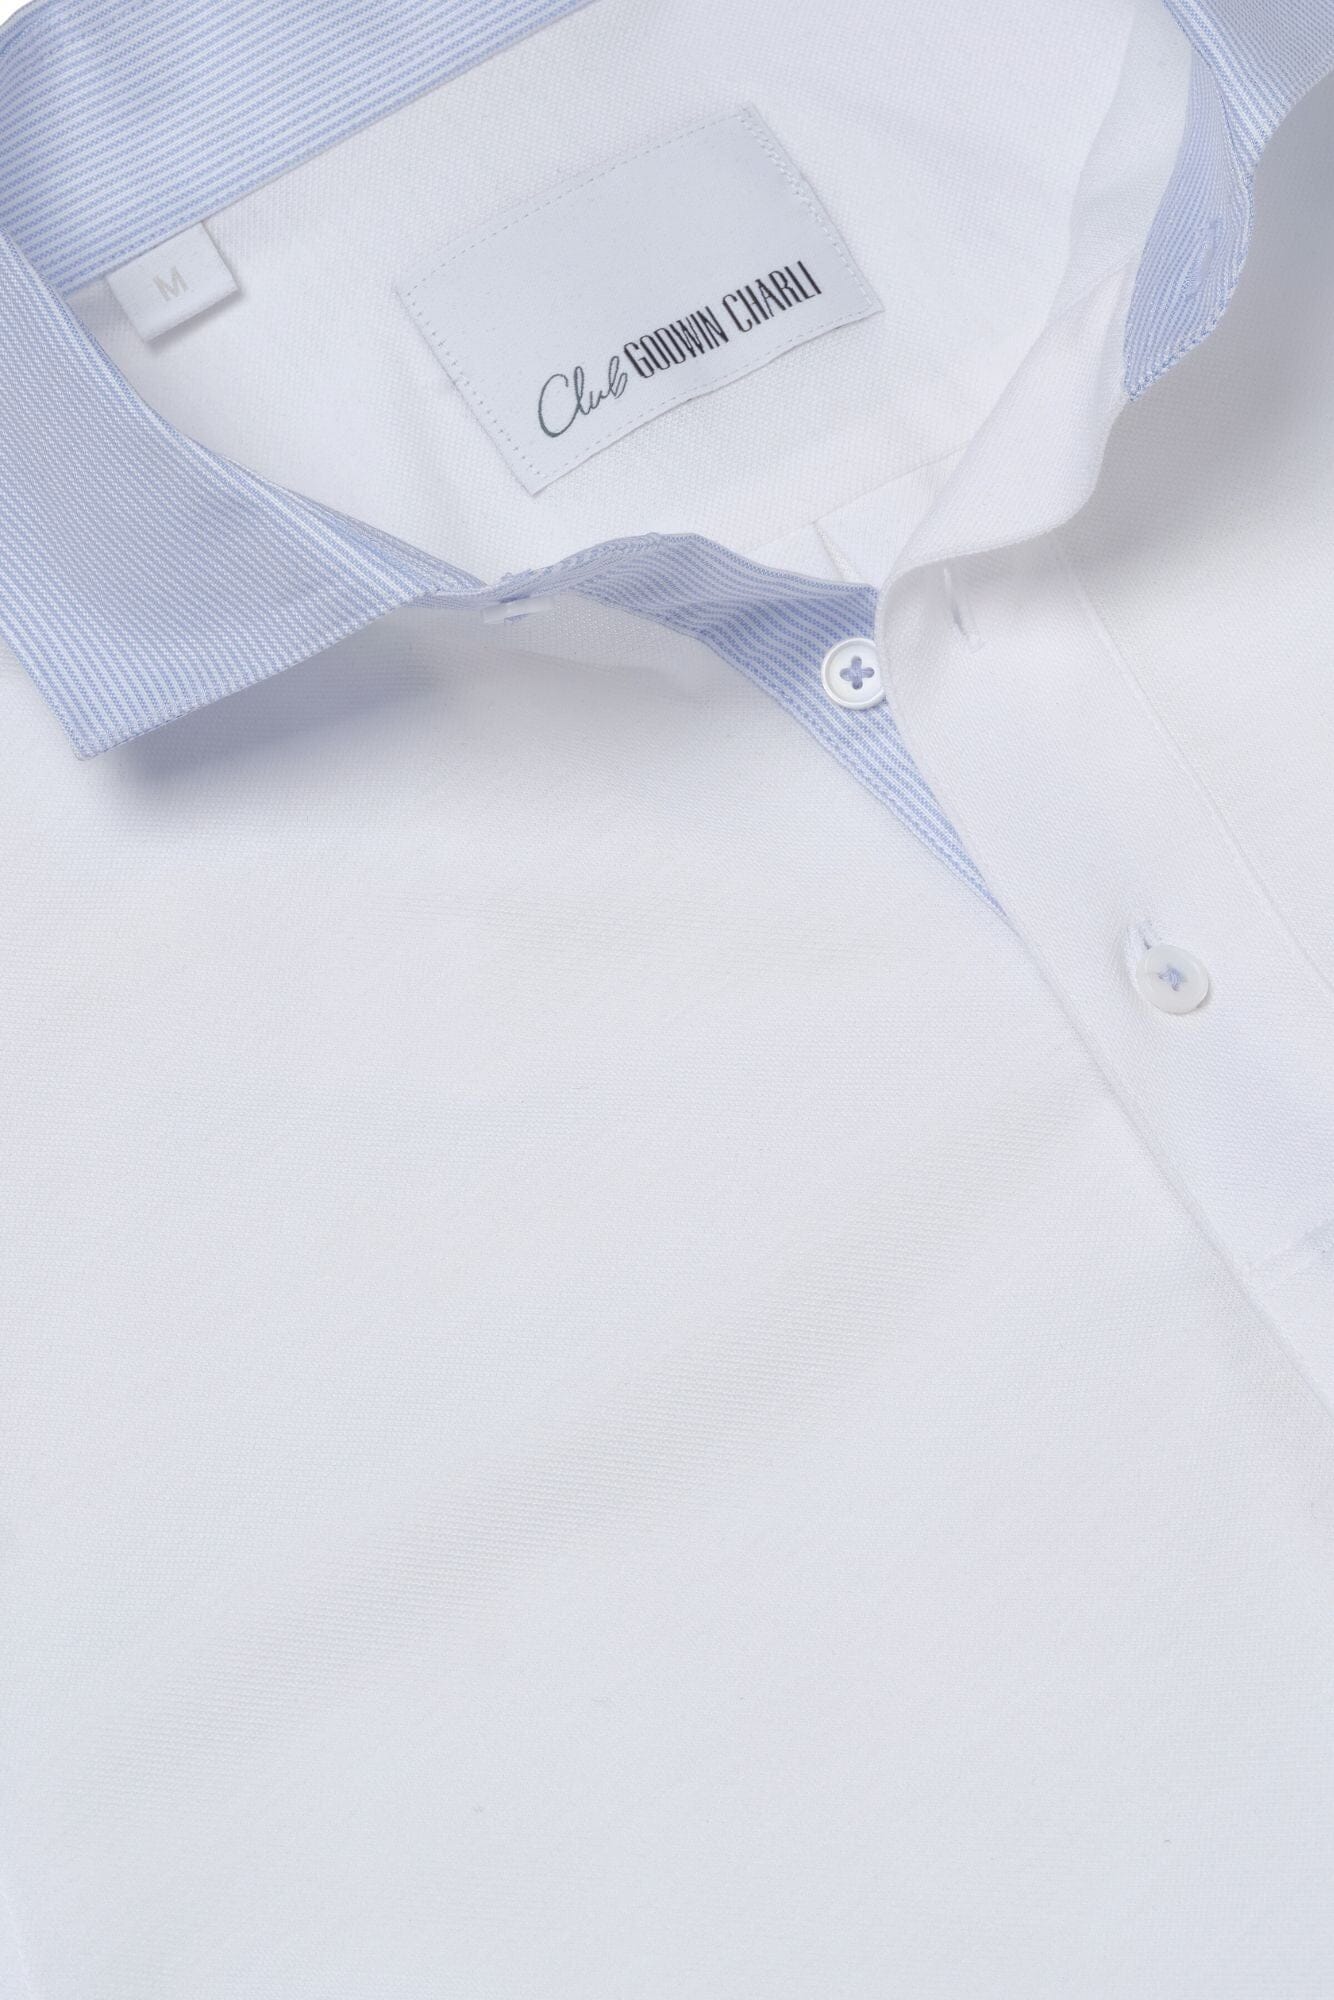 CGC Polo Shirt - White Pique with Mini Stripe Contrast